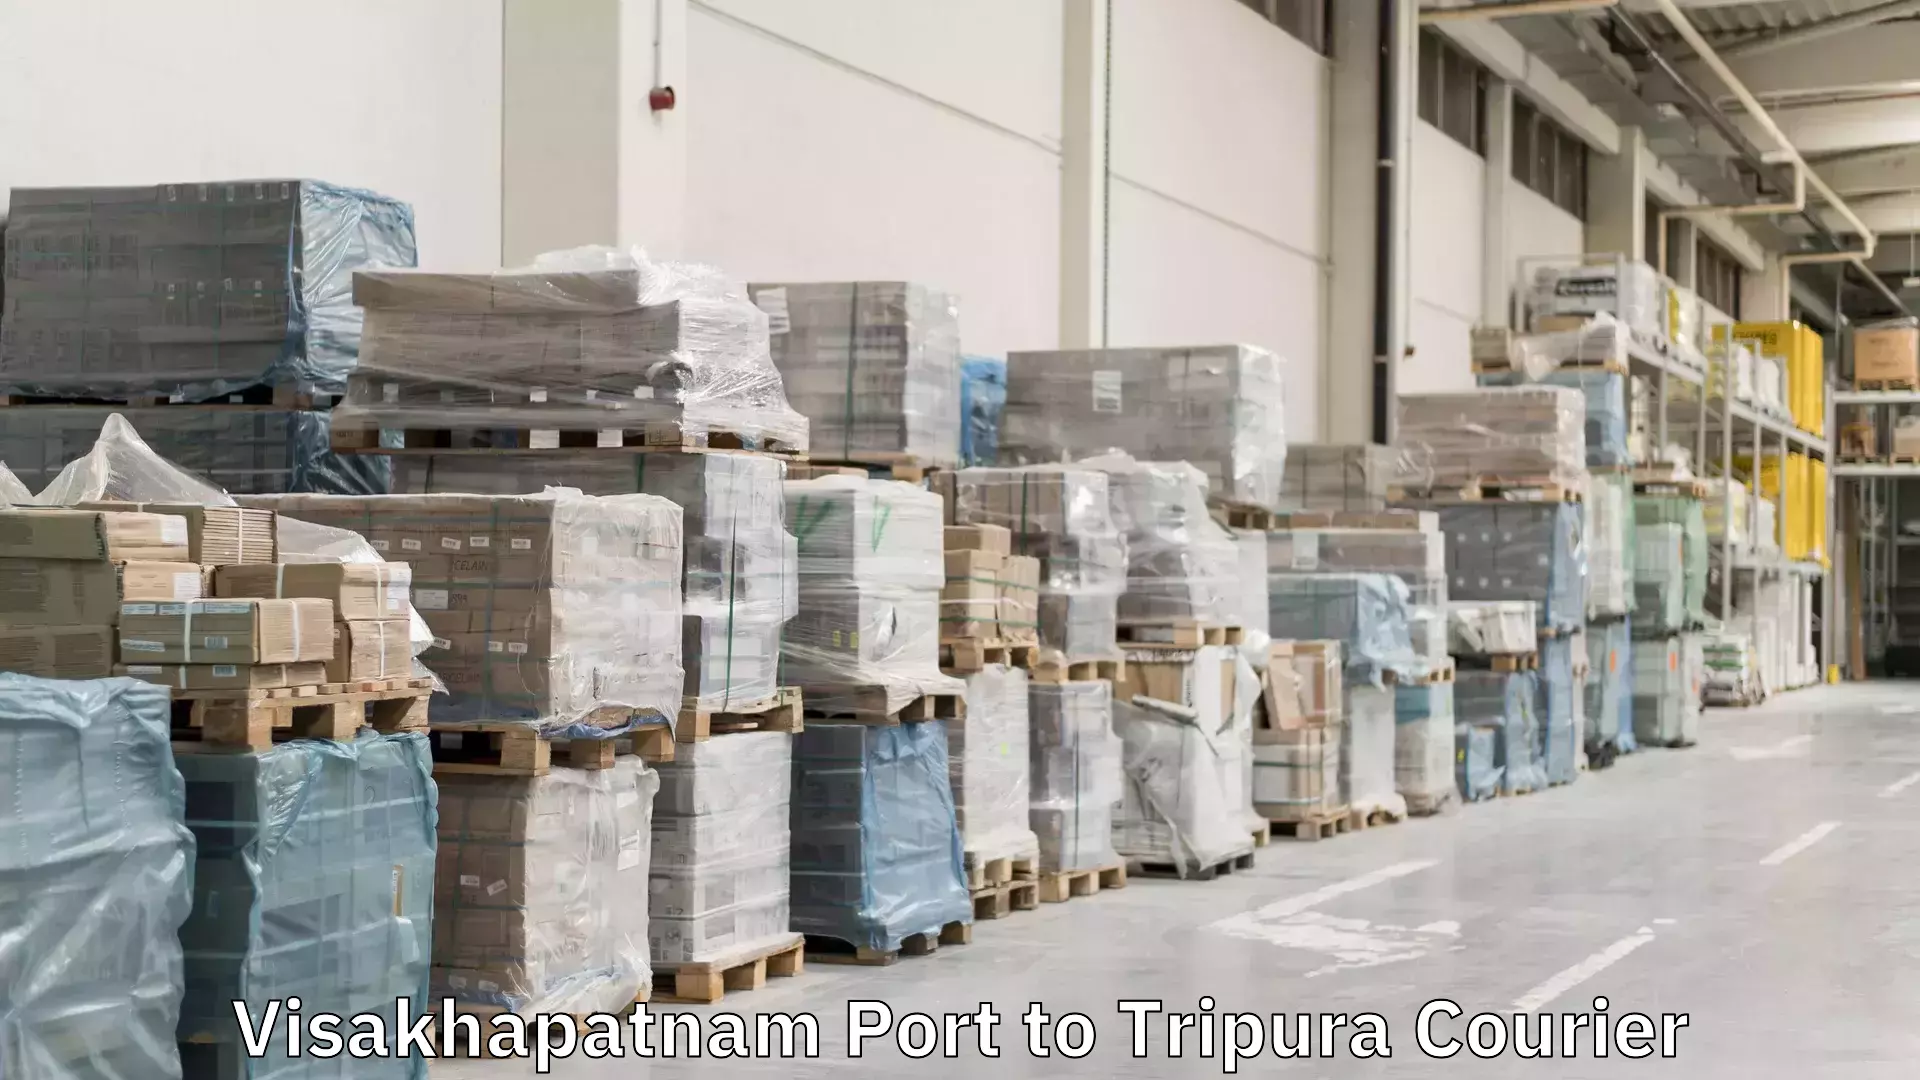 Courier service partnerships Visakhapatnam Port to Tripura